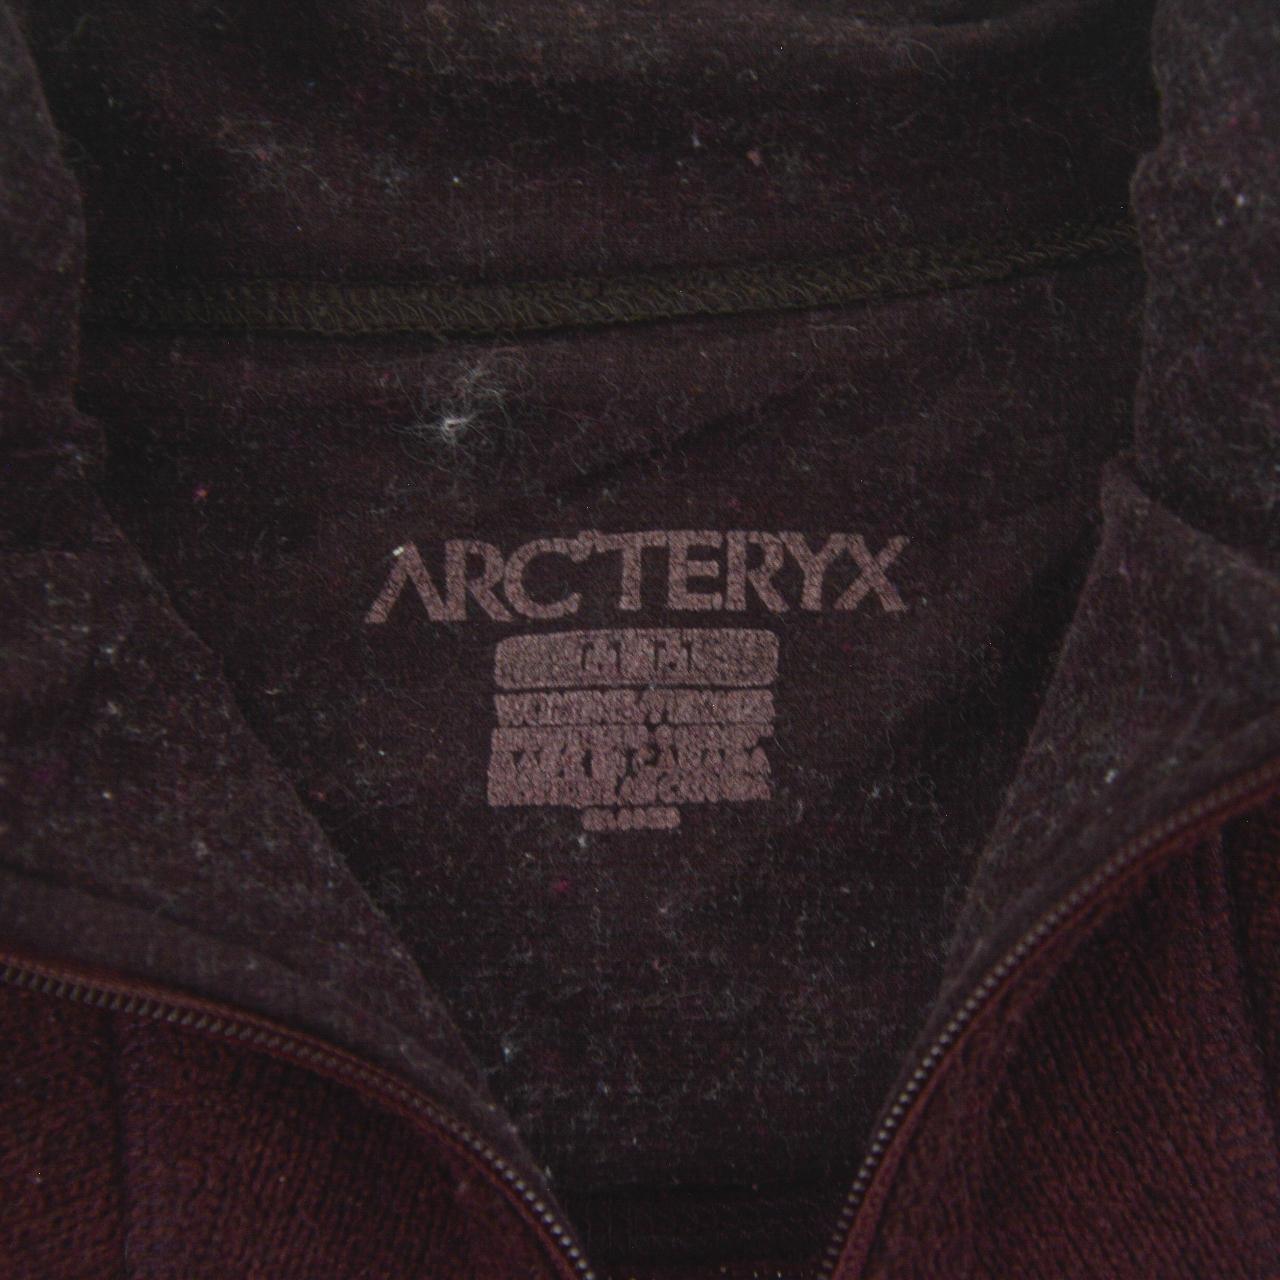 Vintage Arcteryx Fleece Women's Size M - Known Source